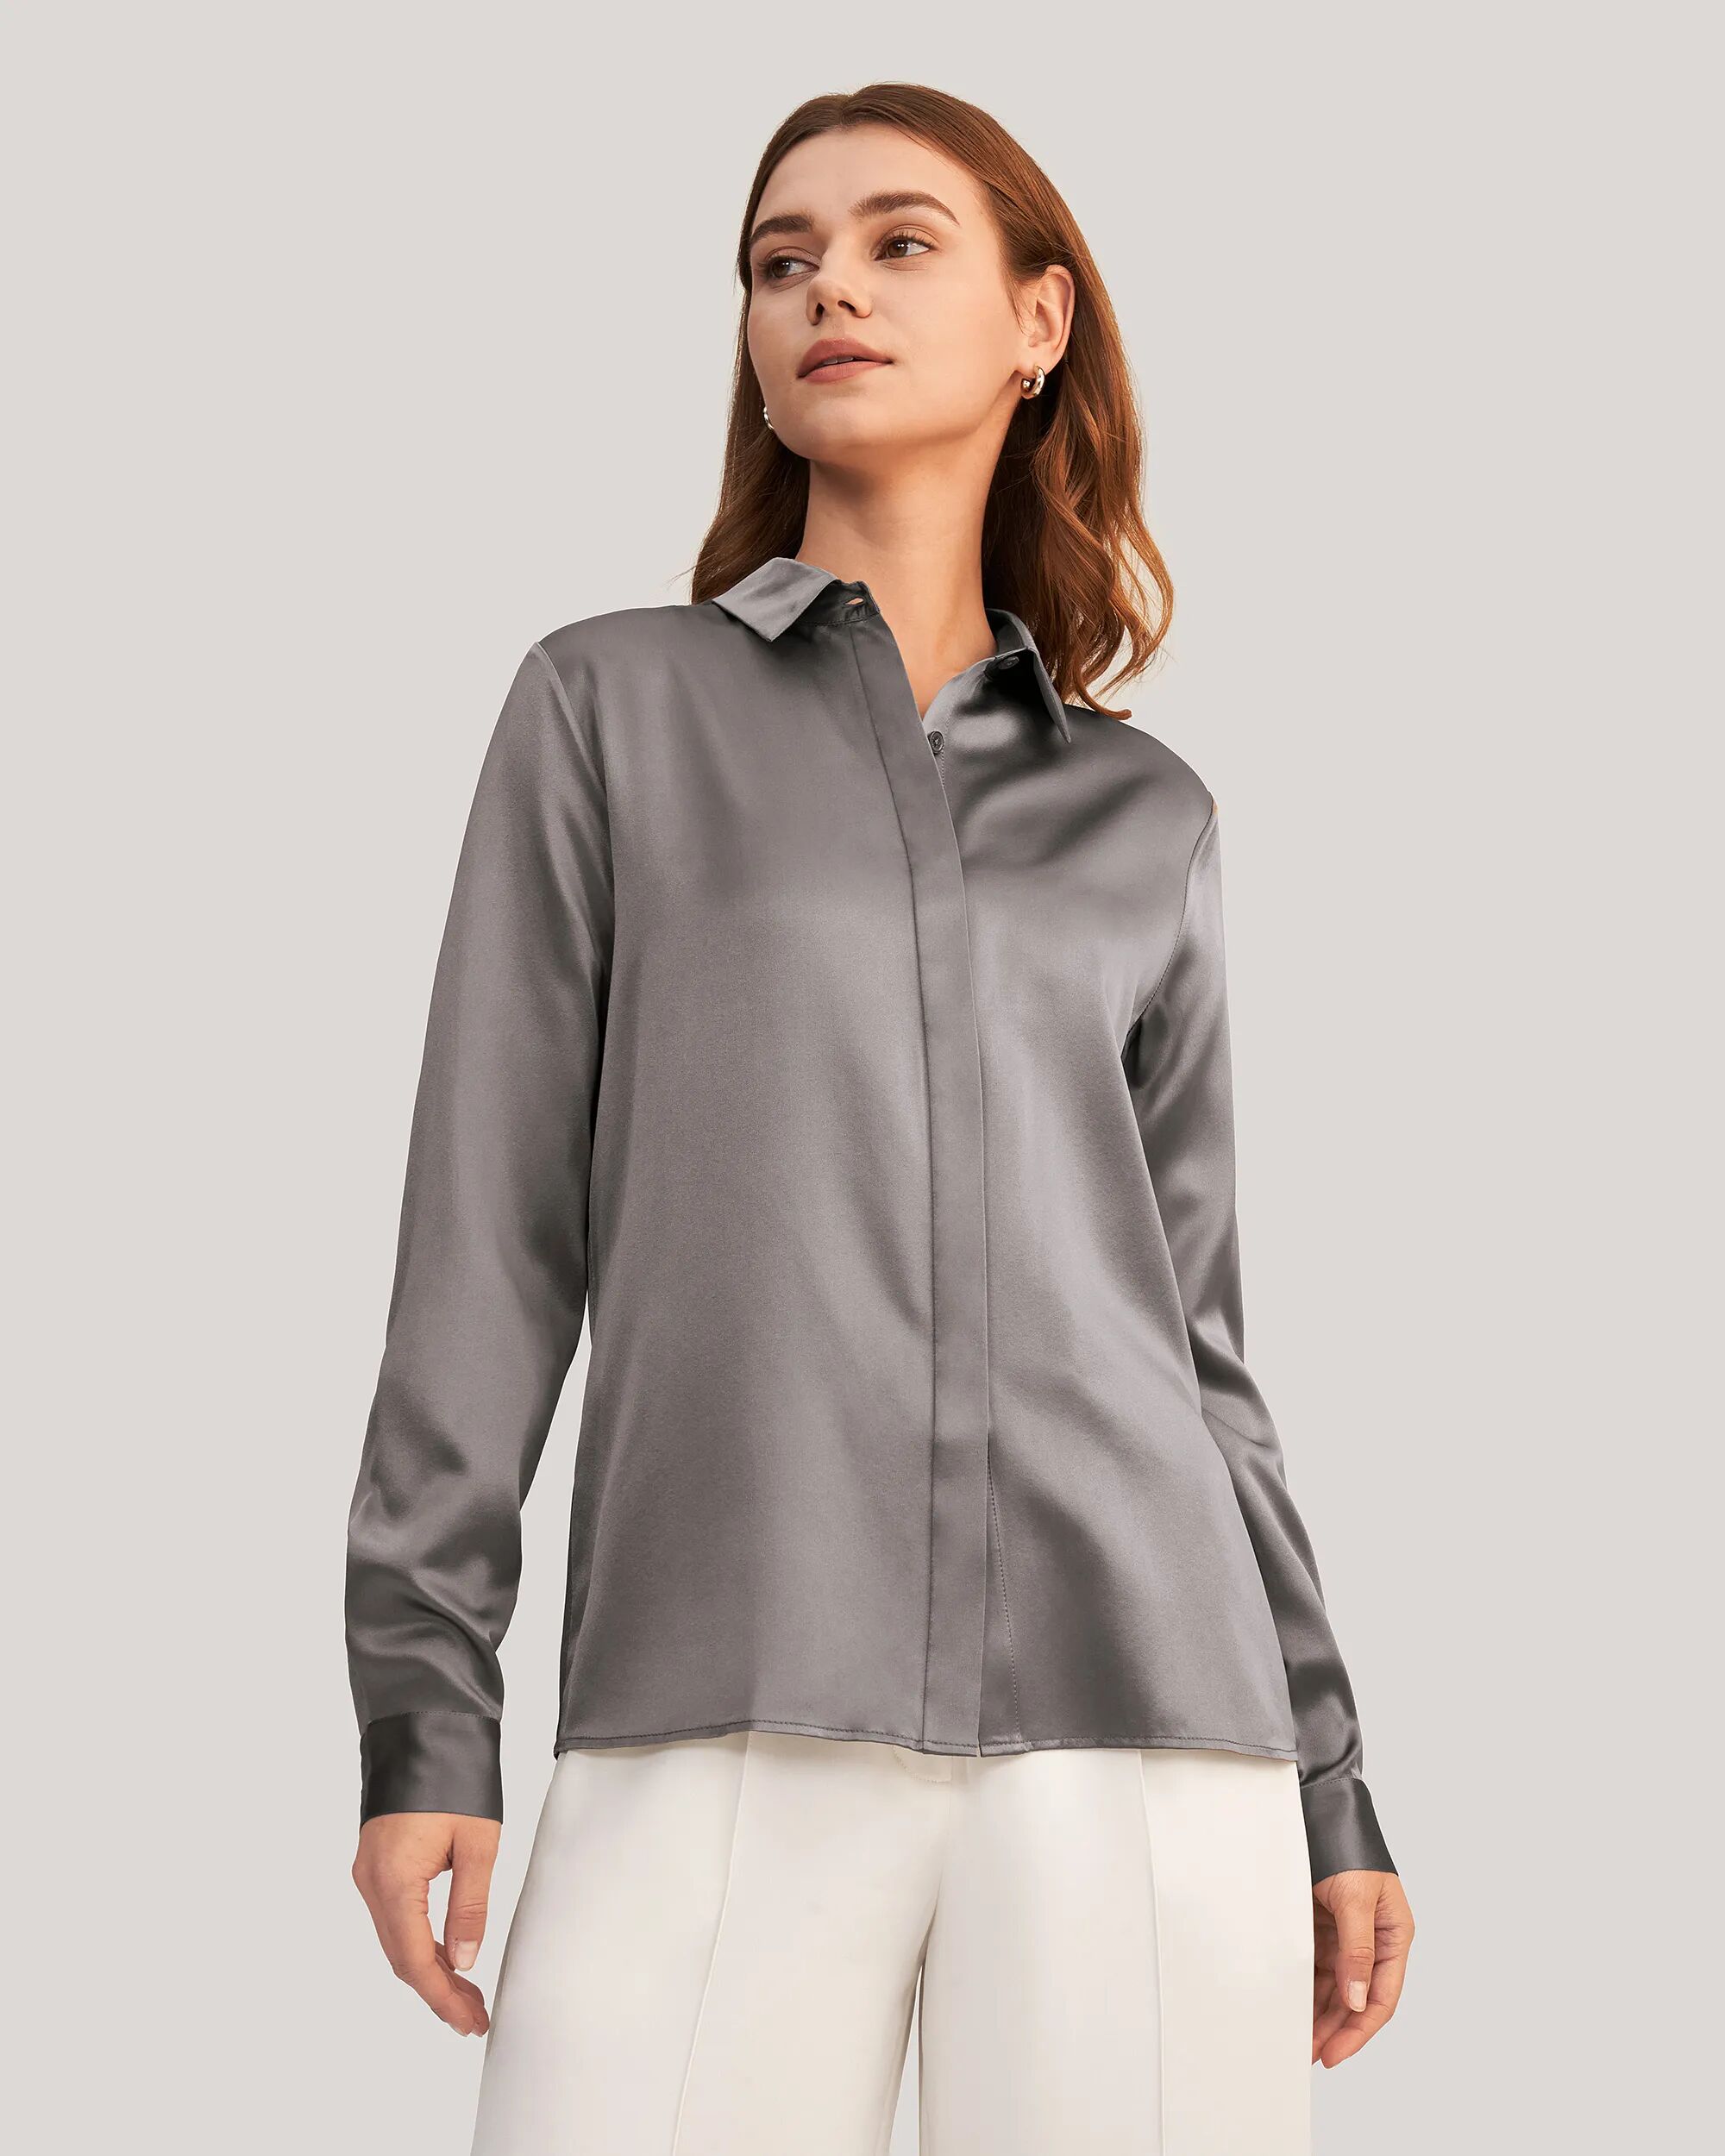 LILYSILK Business Gray Silk Shirt   Plain   Silk Tops Women Glossy Finish Basic Long-Sleeved Skin-Friendly And Breathable L